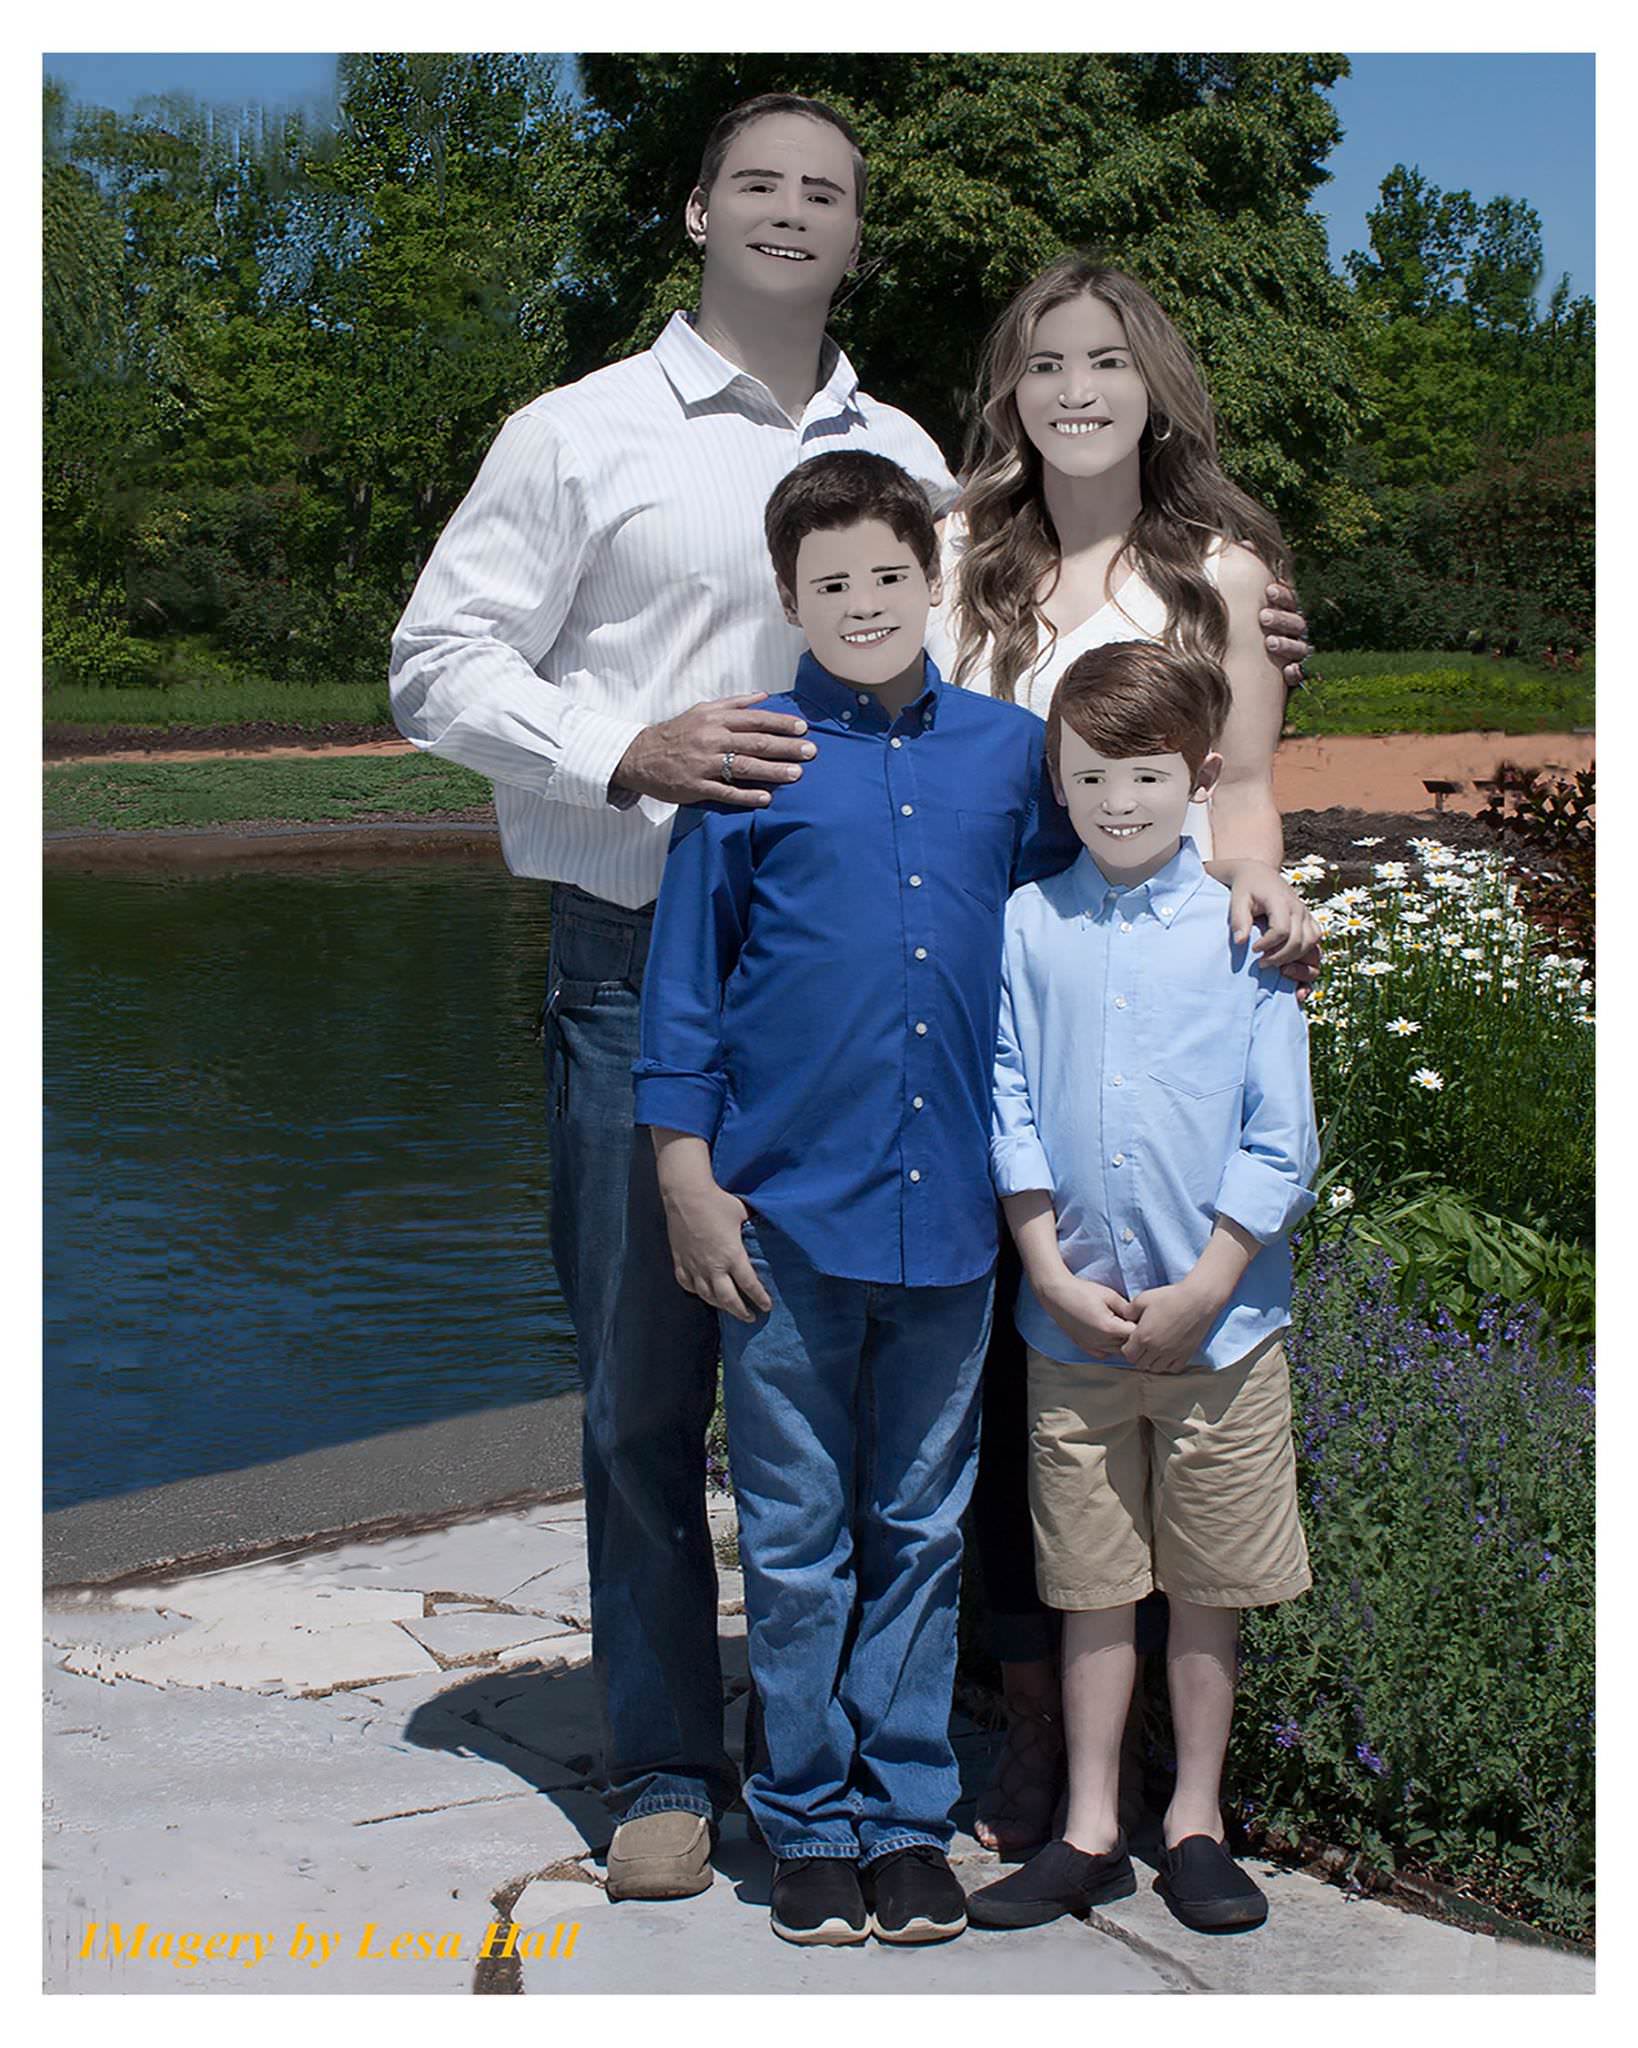 photoshopped family - Tree